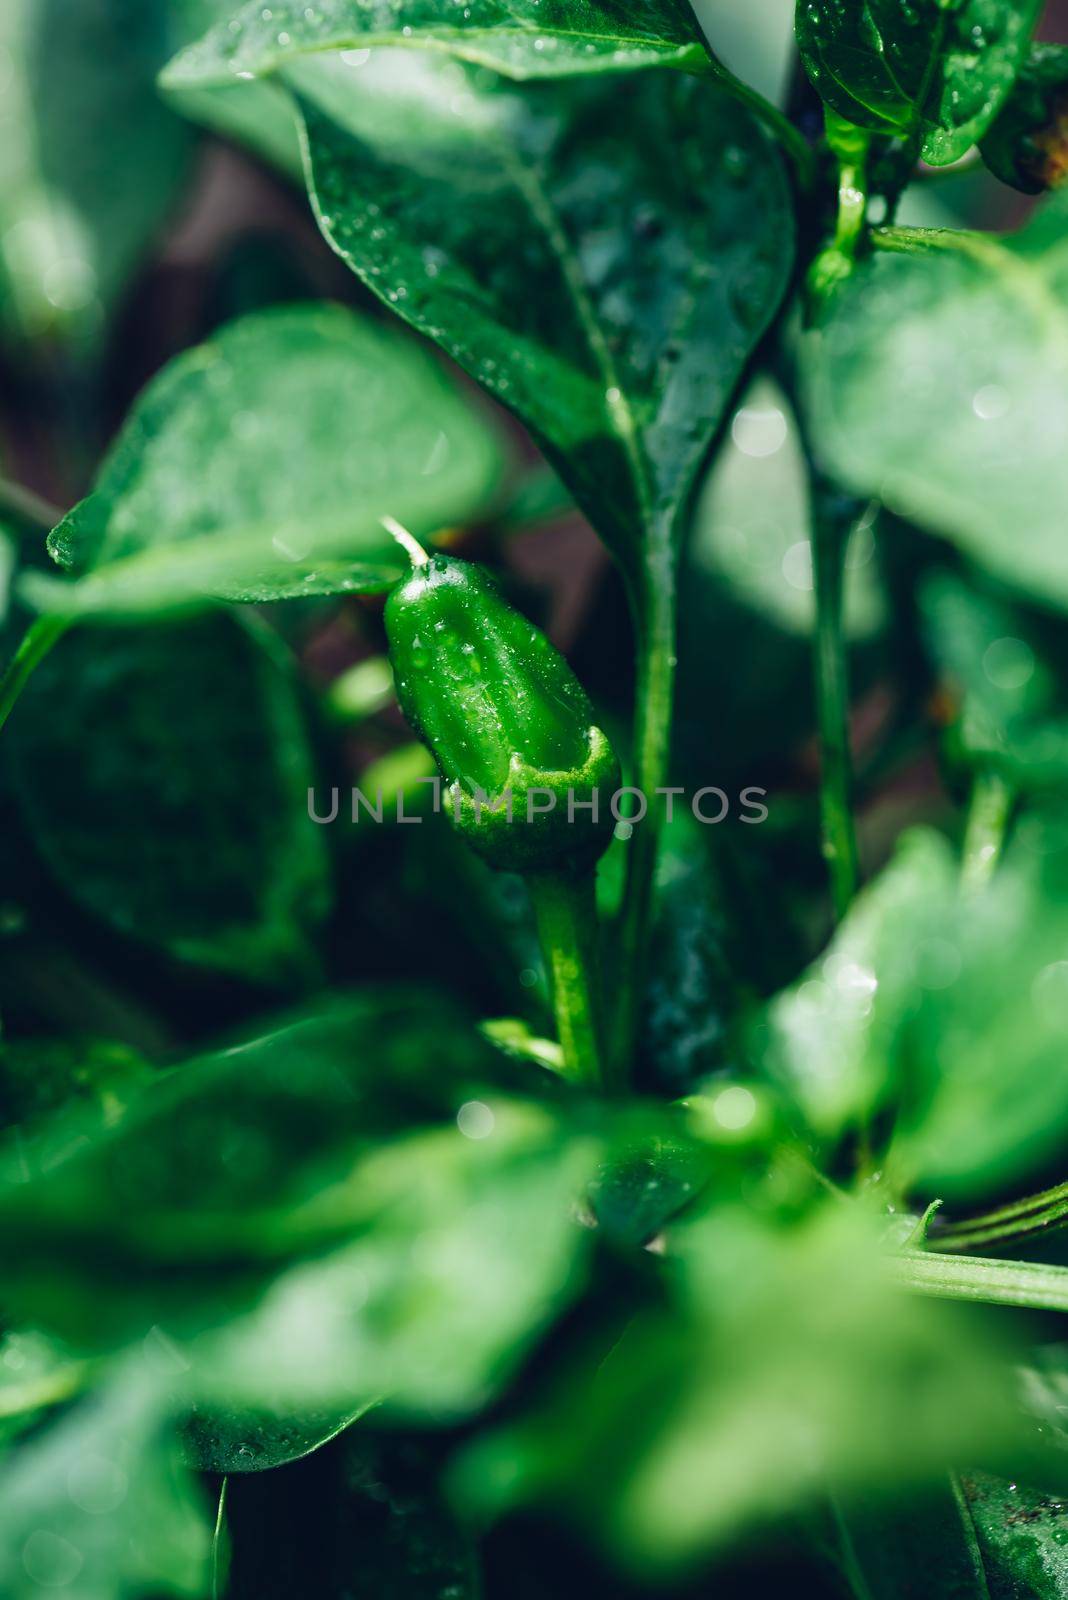 Green Chili Pepper in Backyard Garden by Seva_blsv